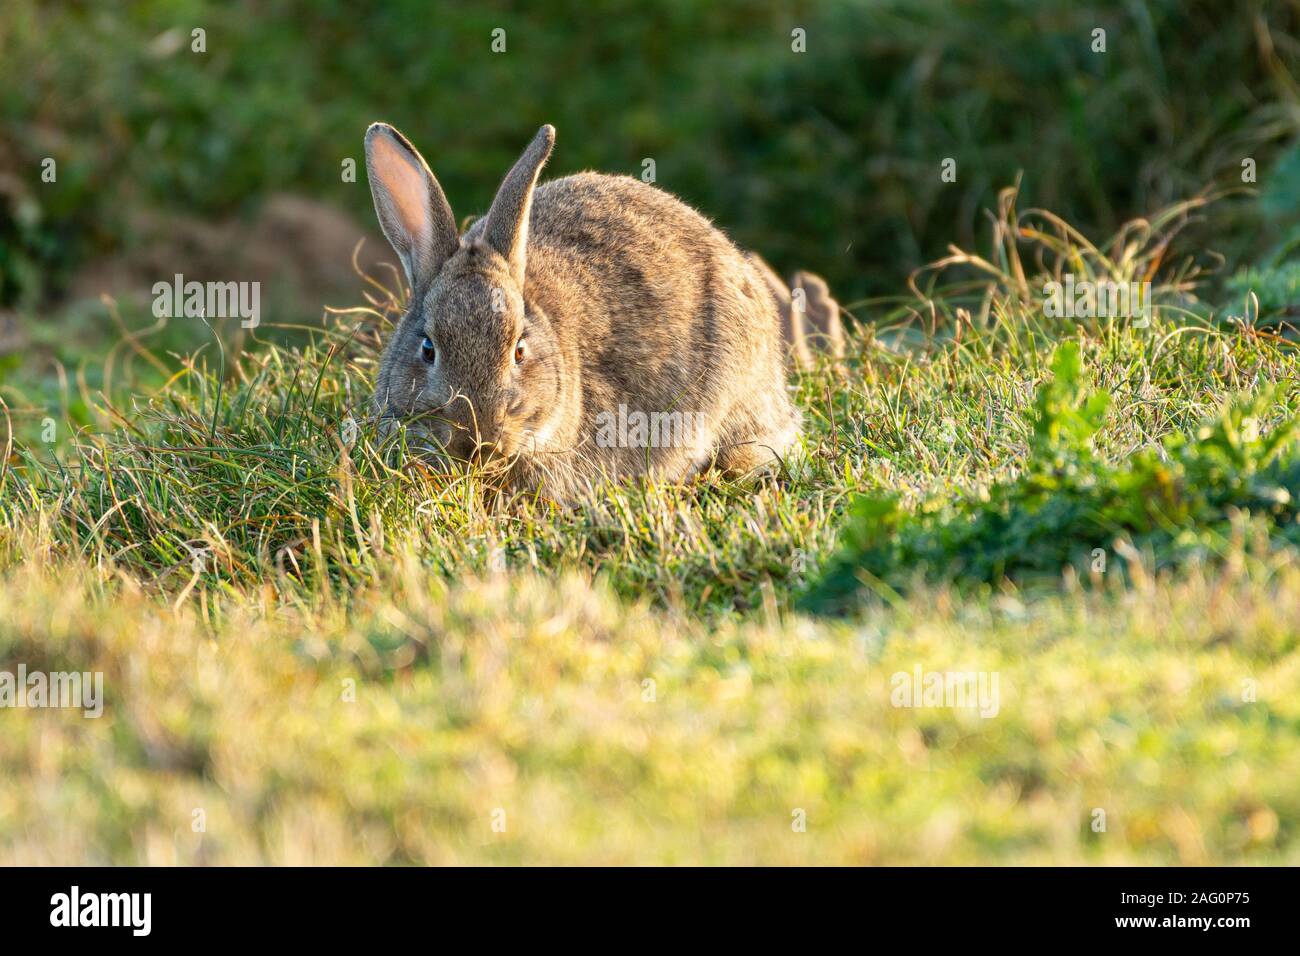 Conigli selvatici (oryctolagus cuniculus) mangiare erba Foto Stock